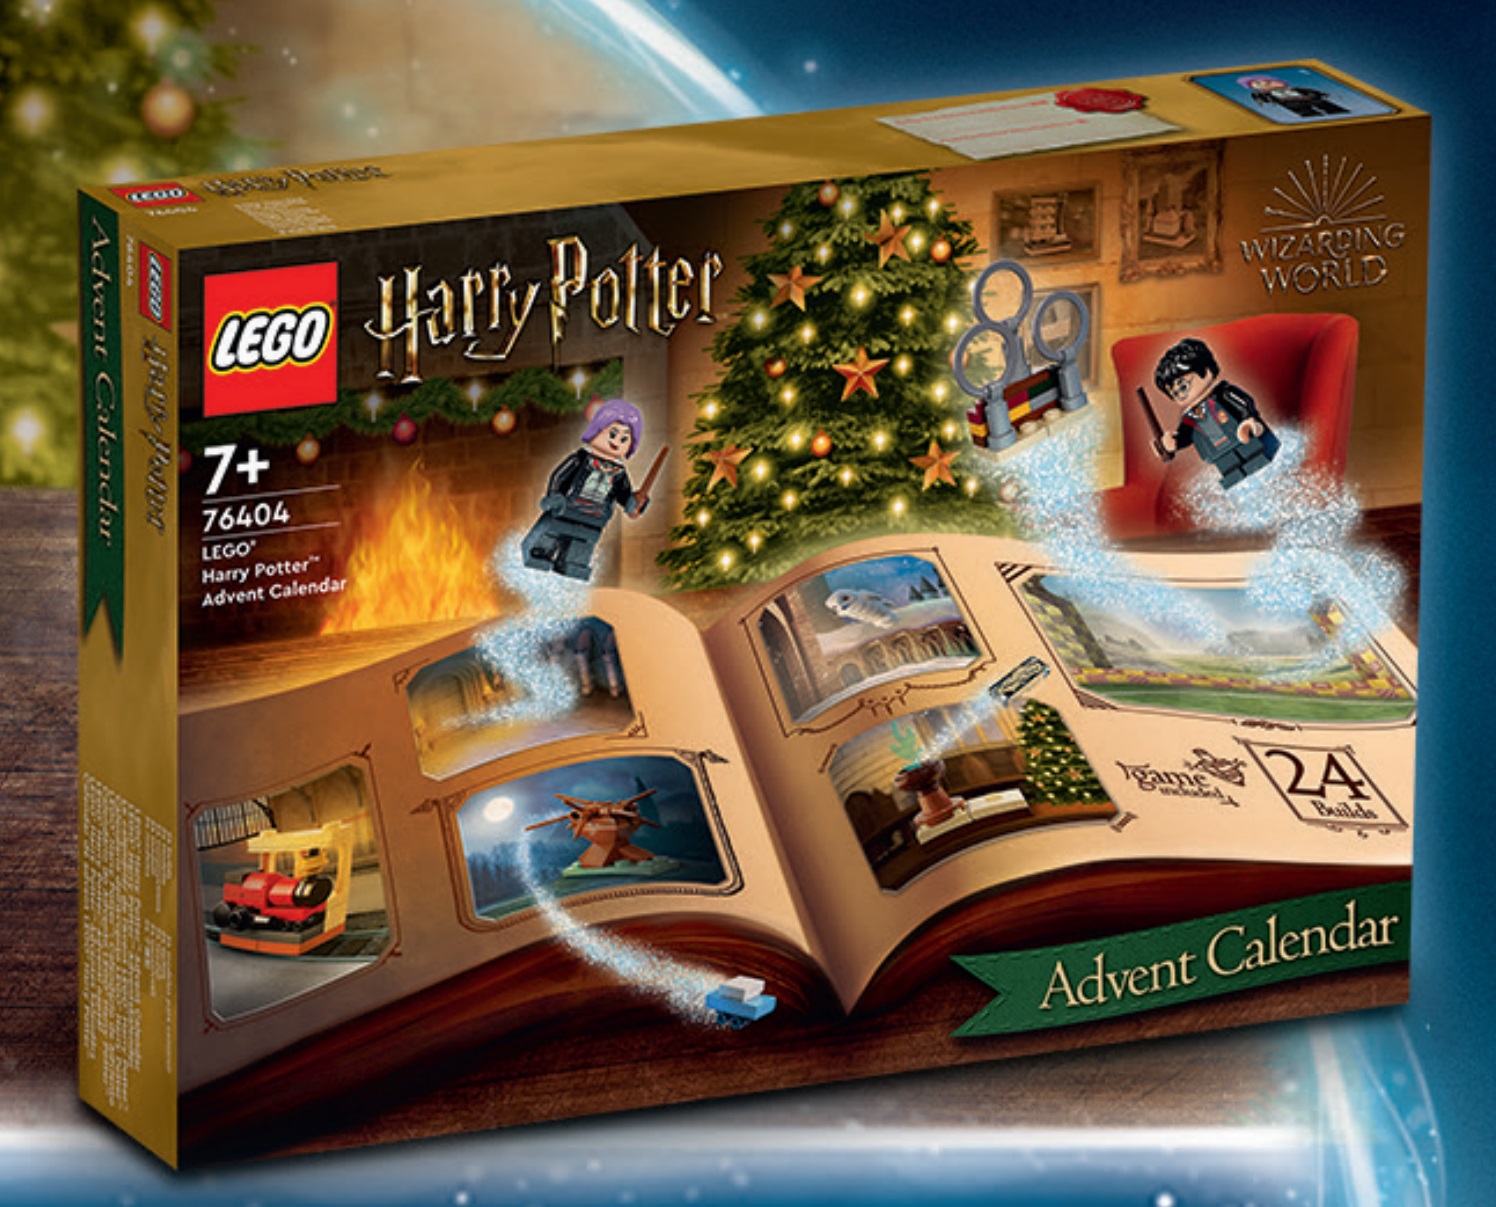 Harry potter advent calendar 